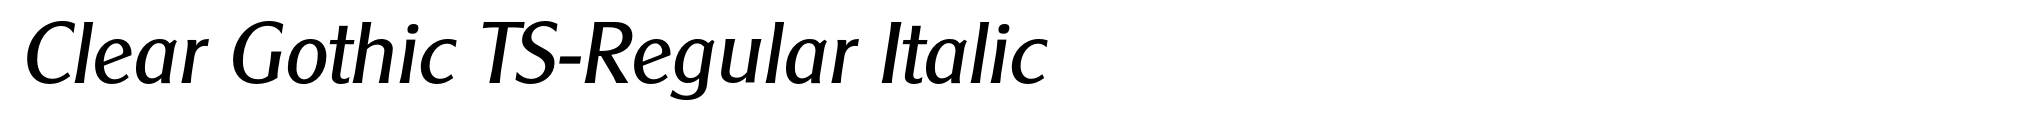 Clear Gothic TS-Regular Italic image